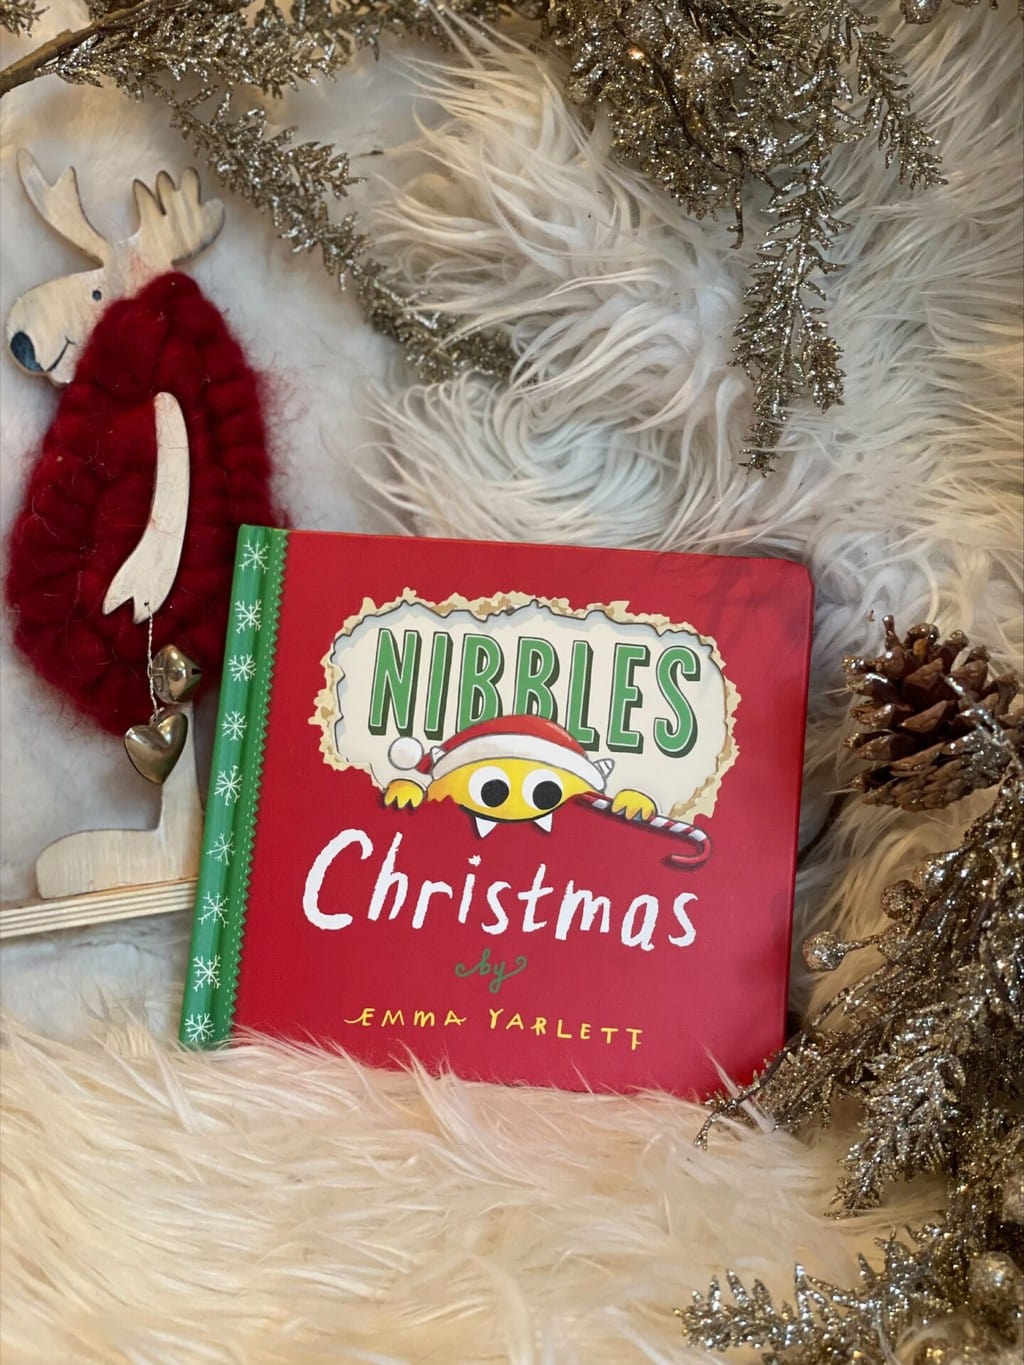 Nibbles Christmas – Emma Yarlett (author and illustrator), Little Tiger Press Ltd (publisher)